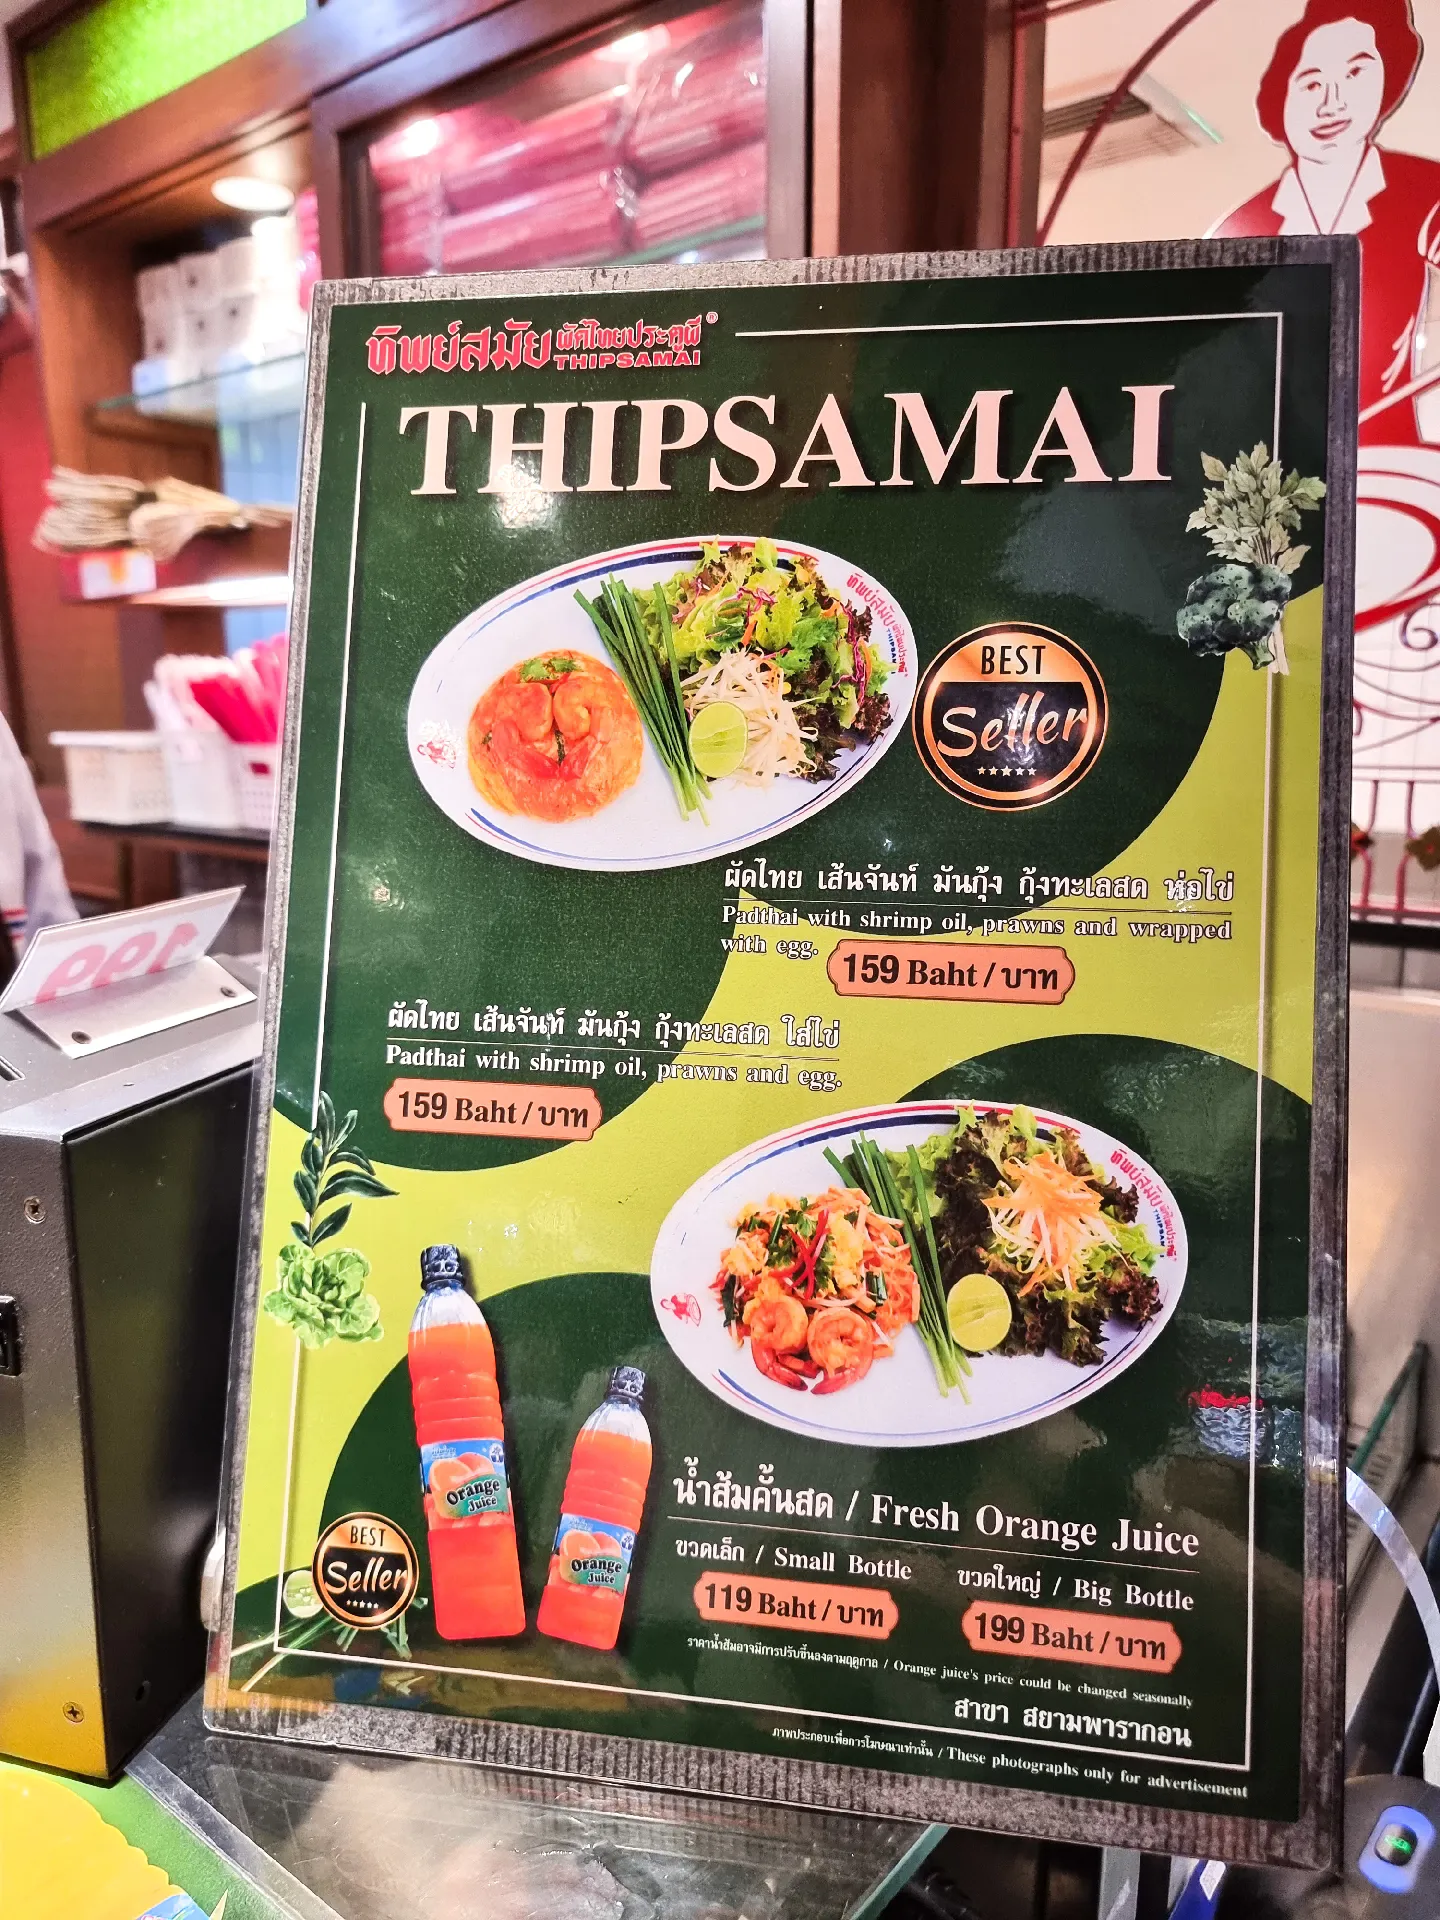 Great Pad Thai place - Review of Thipsamai ICONSIAM, Bangkok, Thailand -  Tripadvisor